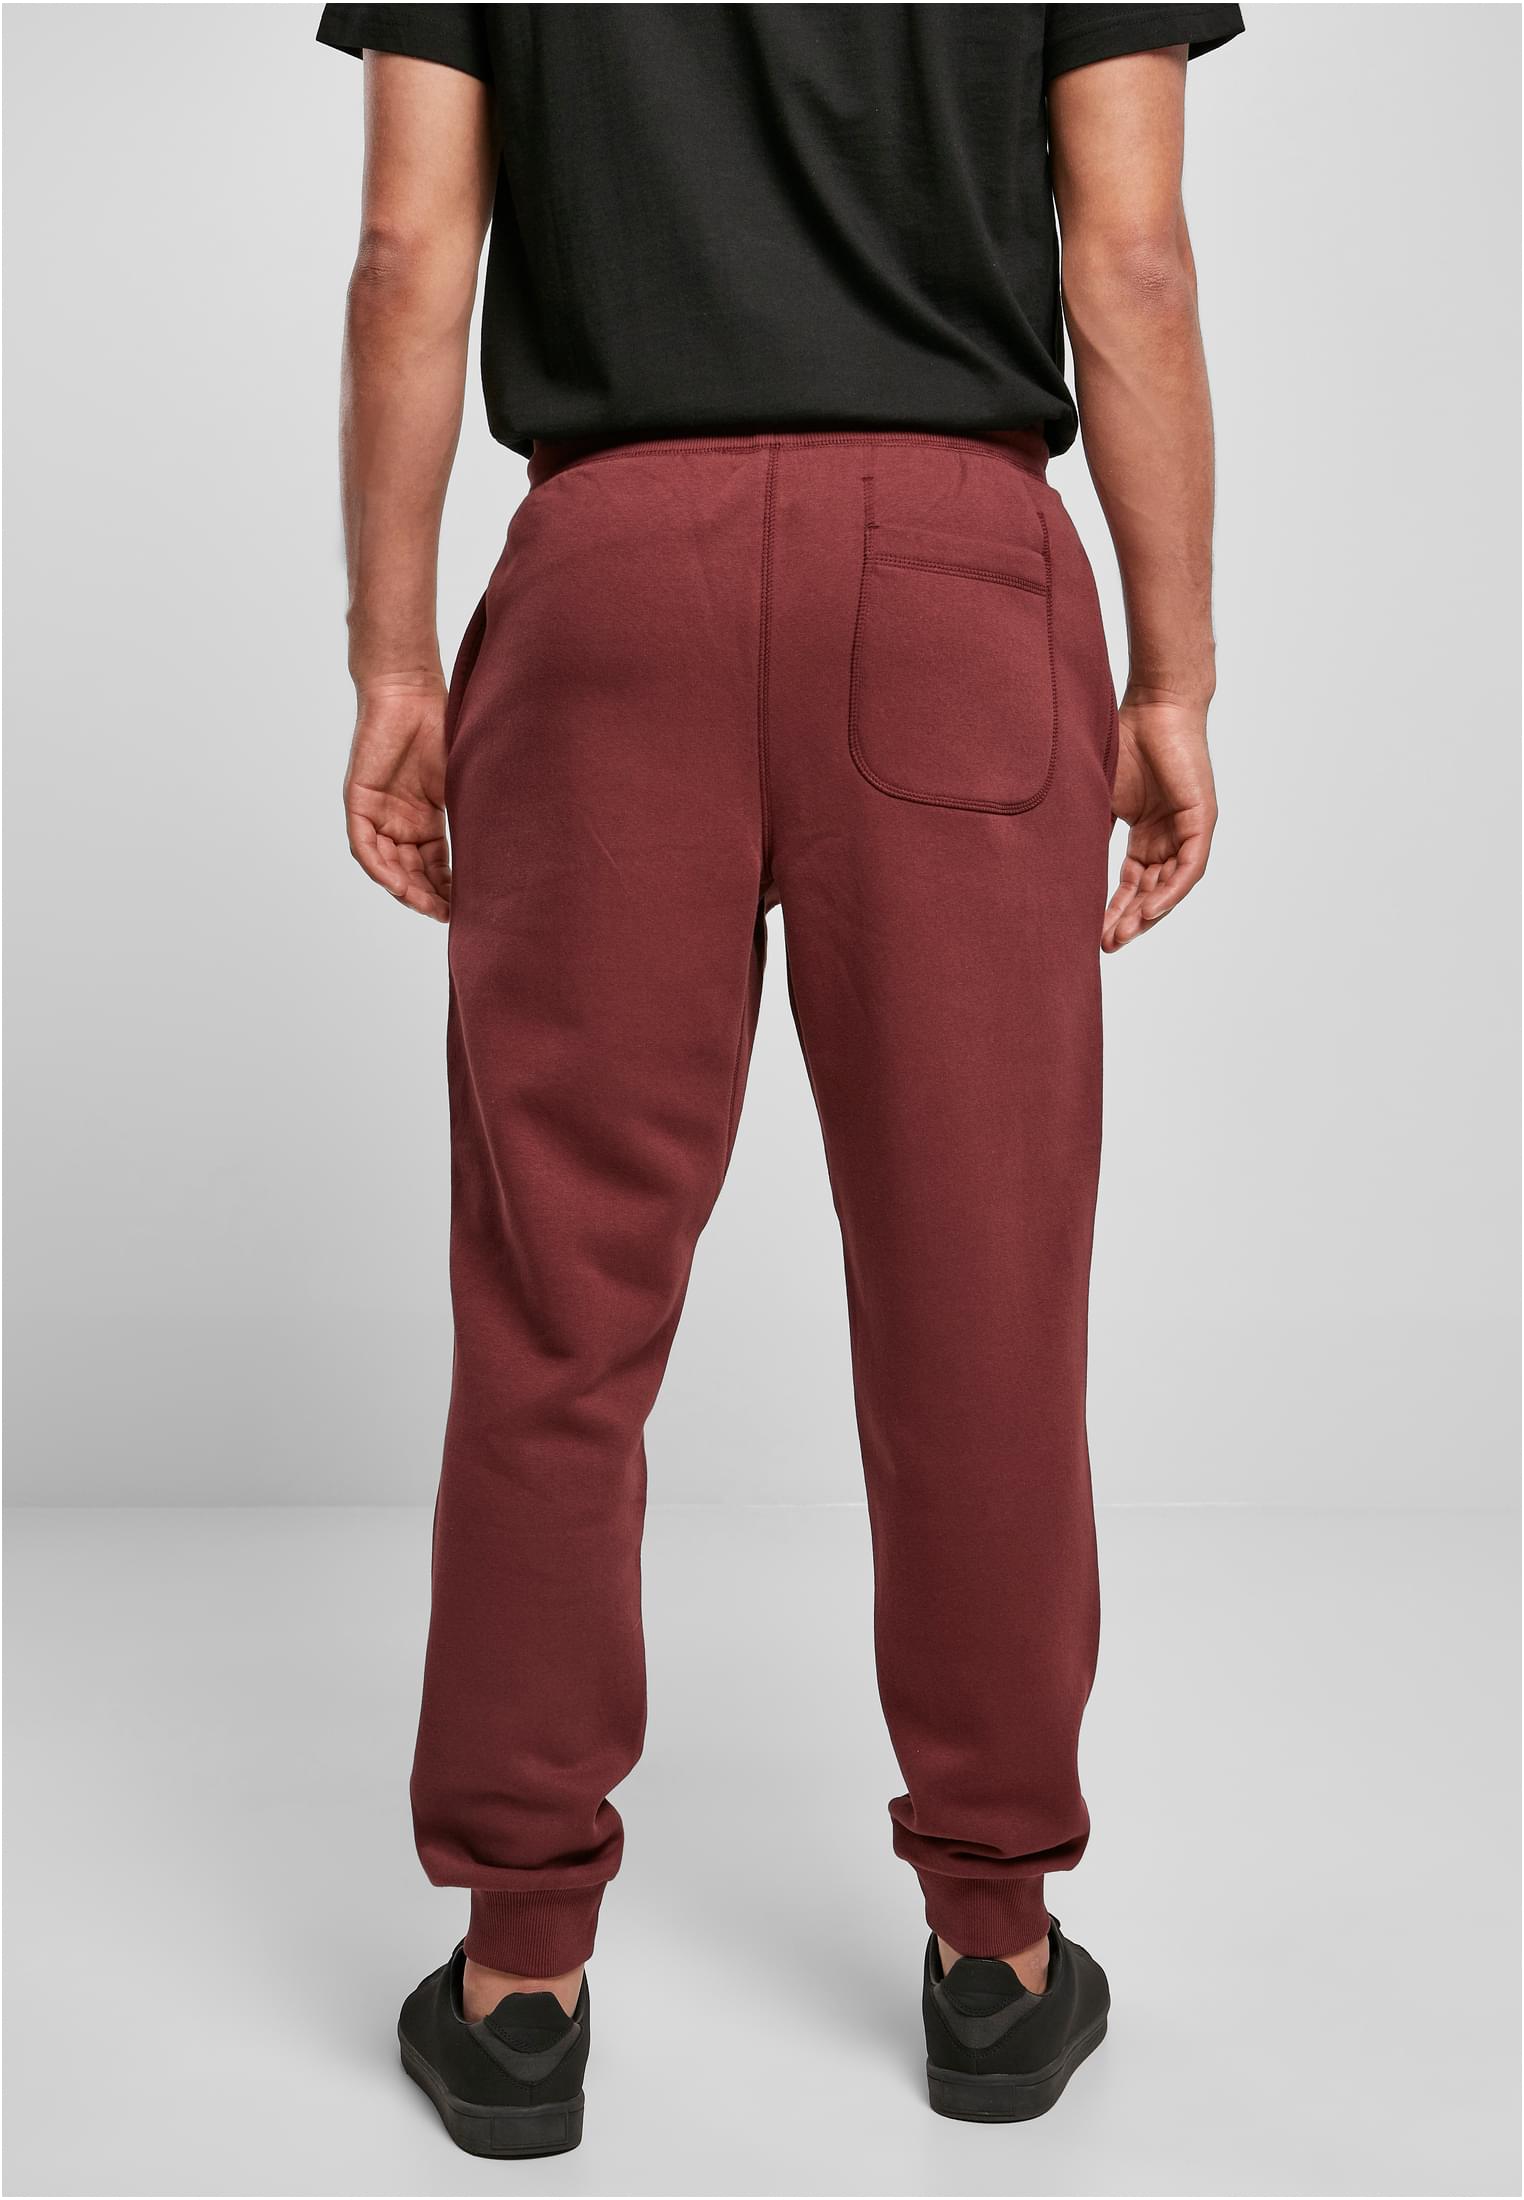 Herren Basic Sweatpants in Farbe cherry